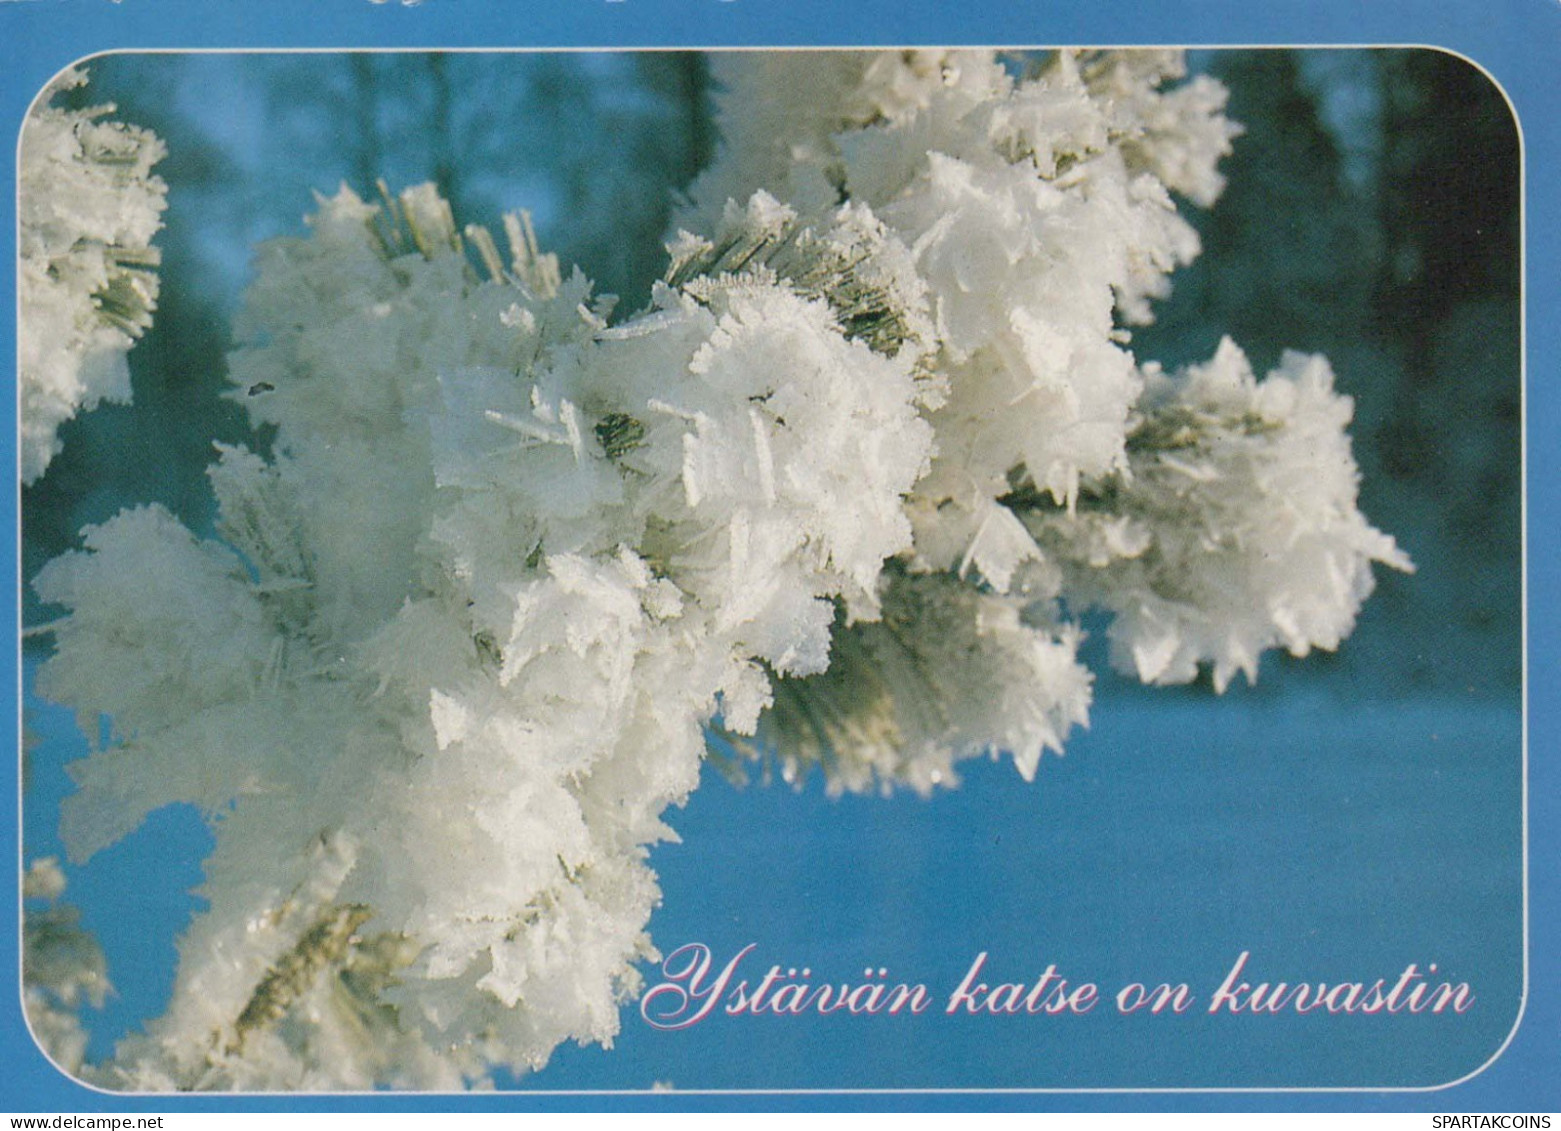 FLOWERS Vintage Ansichtskarte Postkarte CPSM #PBZ538.A - Blumen